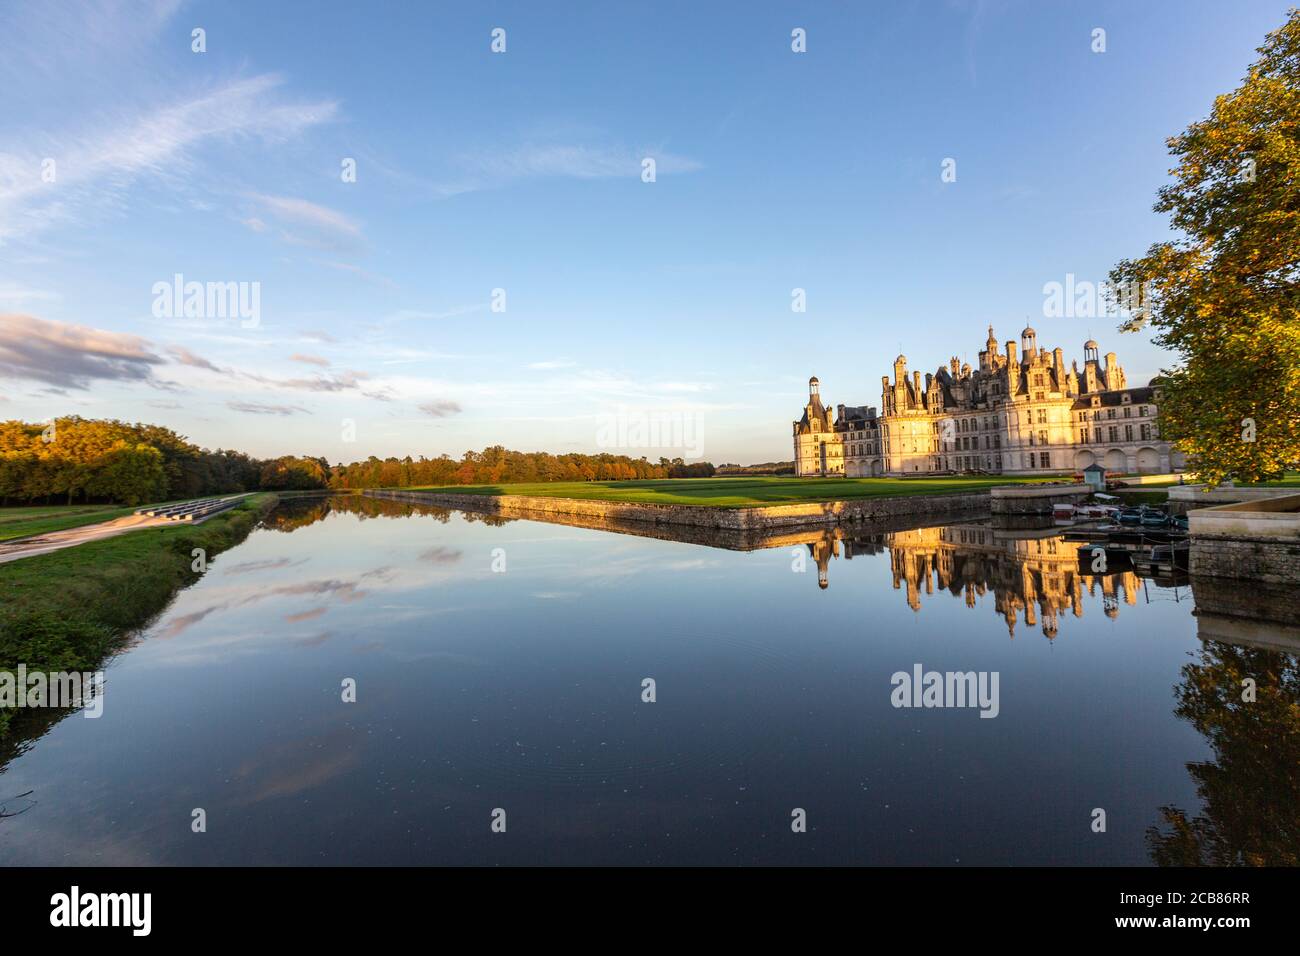 Reflexión del castillo de Chambord al atardecer, Chambord, Loir-et-Cher, Francia, Foto de stock